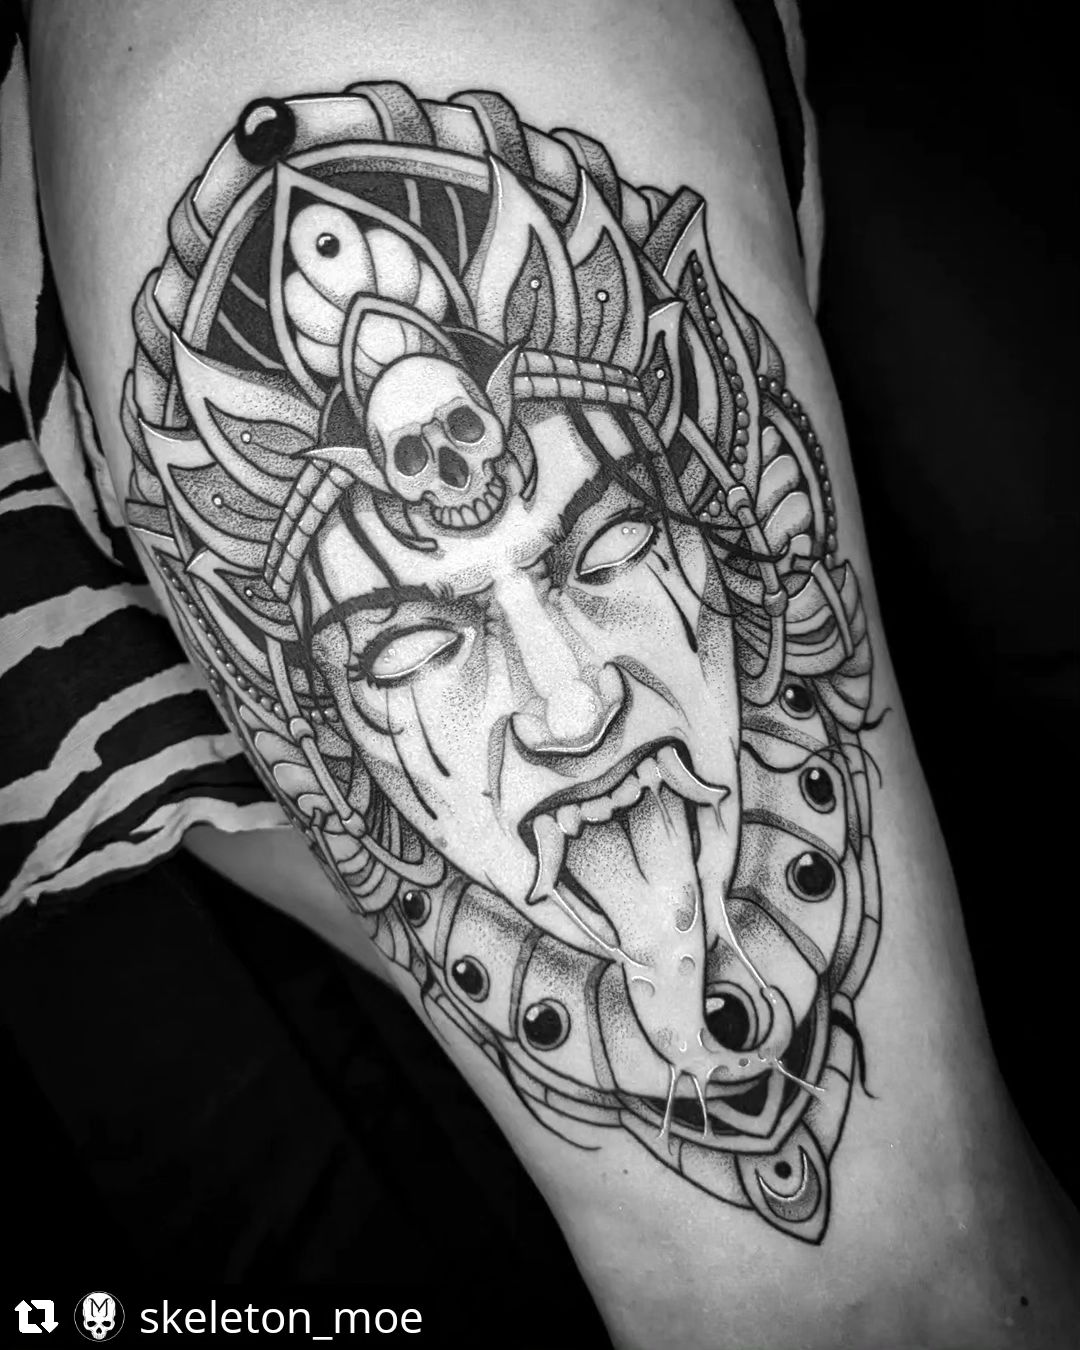 Kali von @skeleton_moe
• • • • • •
#tattoo #kali #blackwork #tattooartist #inked